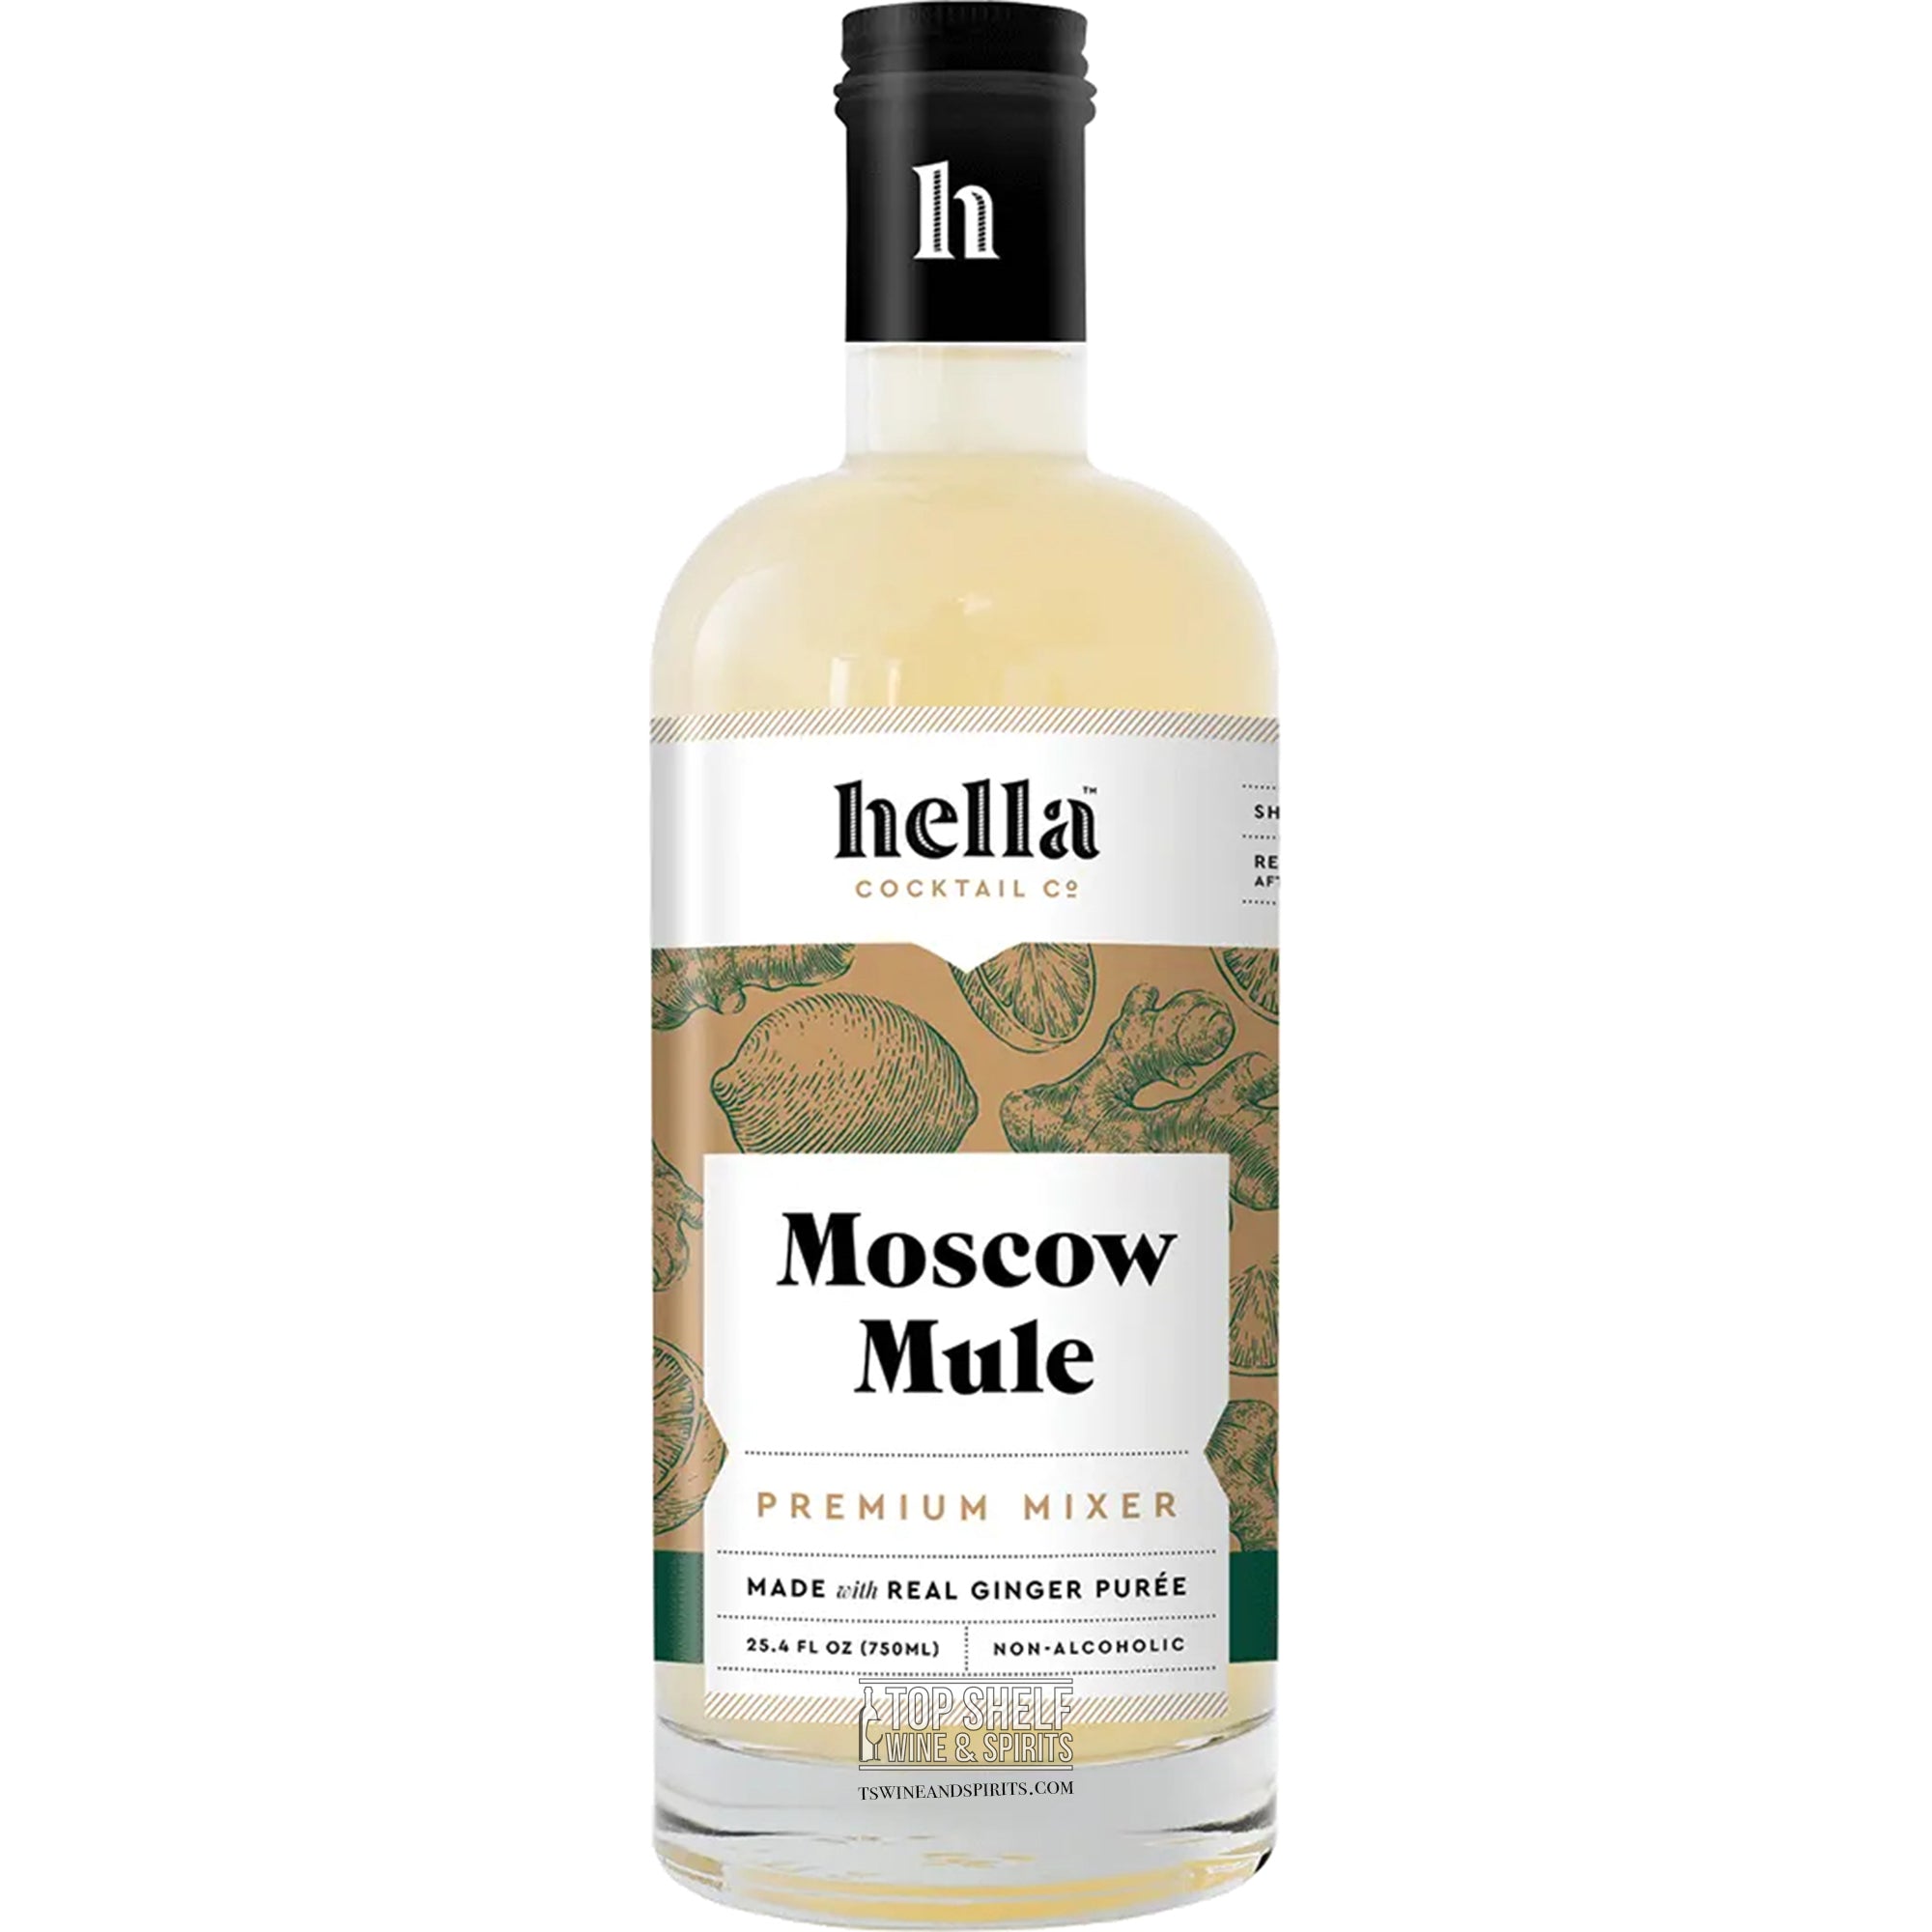 Hella Moscow Mule Mixer